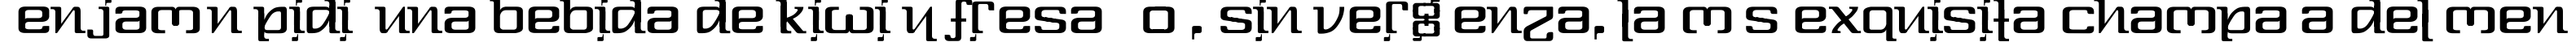 Пример написания шрифтом One-Eighty Regular текста на испанском